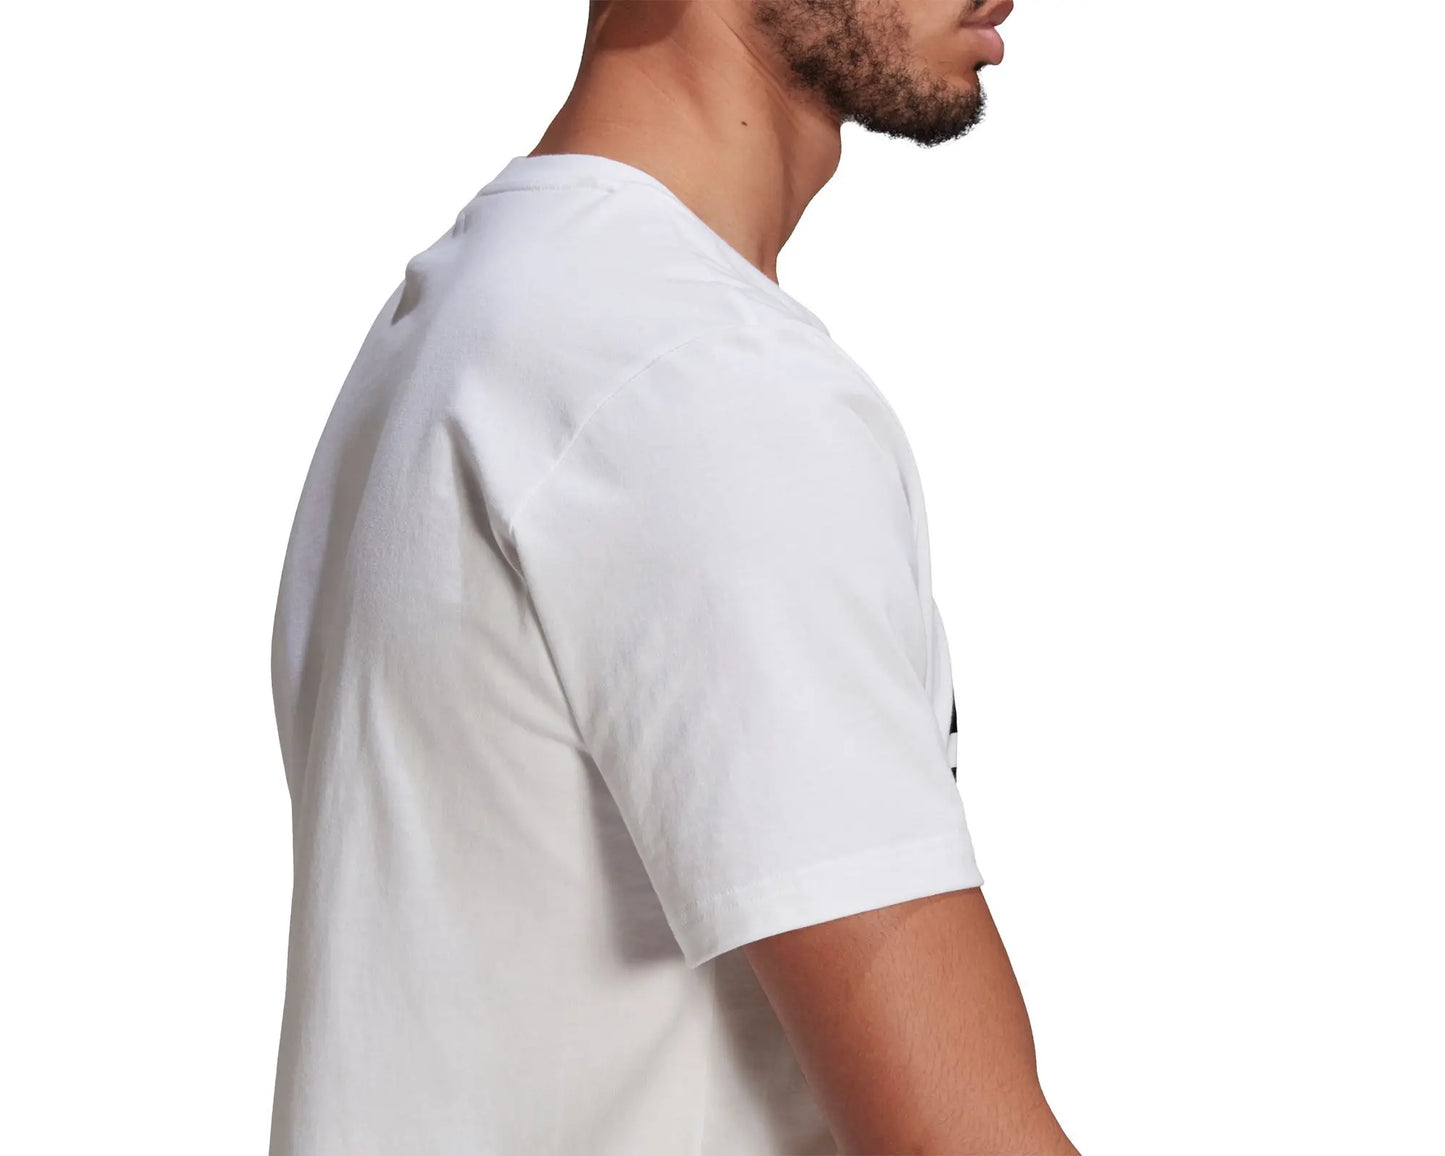 
                  
                    Adidas Original Men's Daily Wear T-Shirt White Color Sporty Walking Training Training Sports Daily M Bl Sj T T-Shirt
                  
                